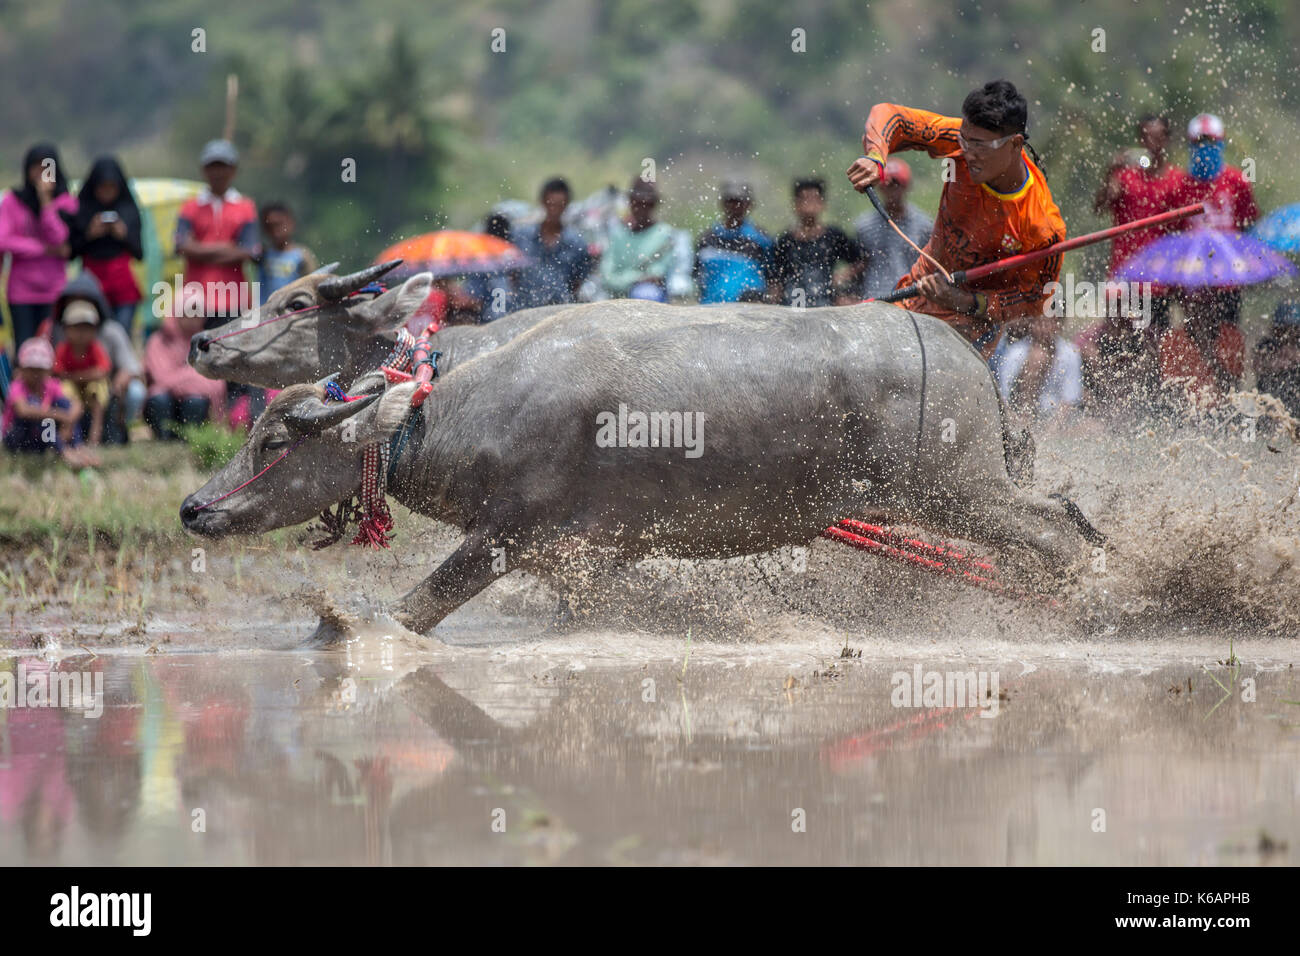 Jereweh, sumbawa barat, Indonesia - 10 settembre 2017: locale buffalo race competition tenutasi il sumbawa in jereweh, Indonesia il 10 settembre 2017. Foto Stock